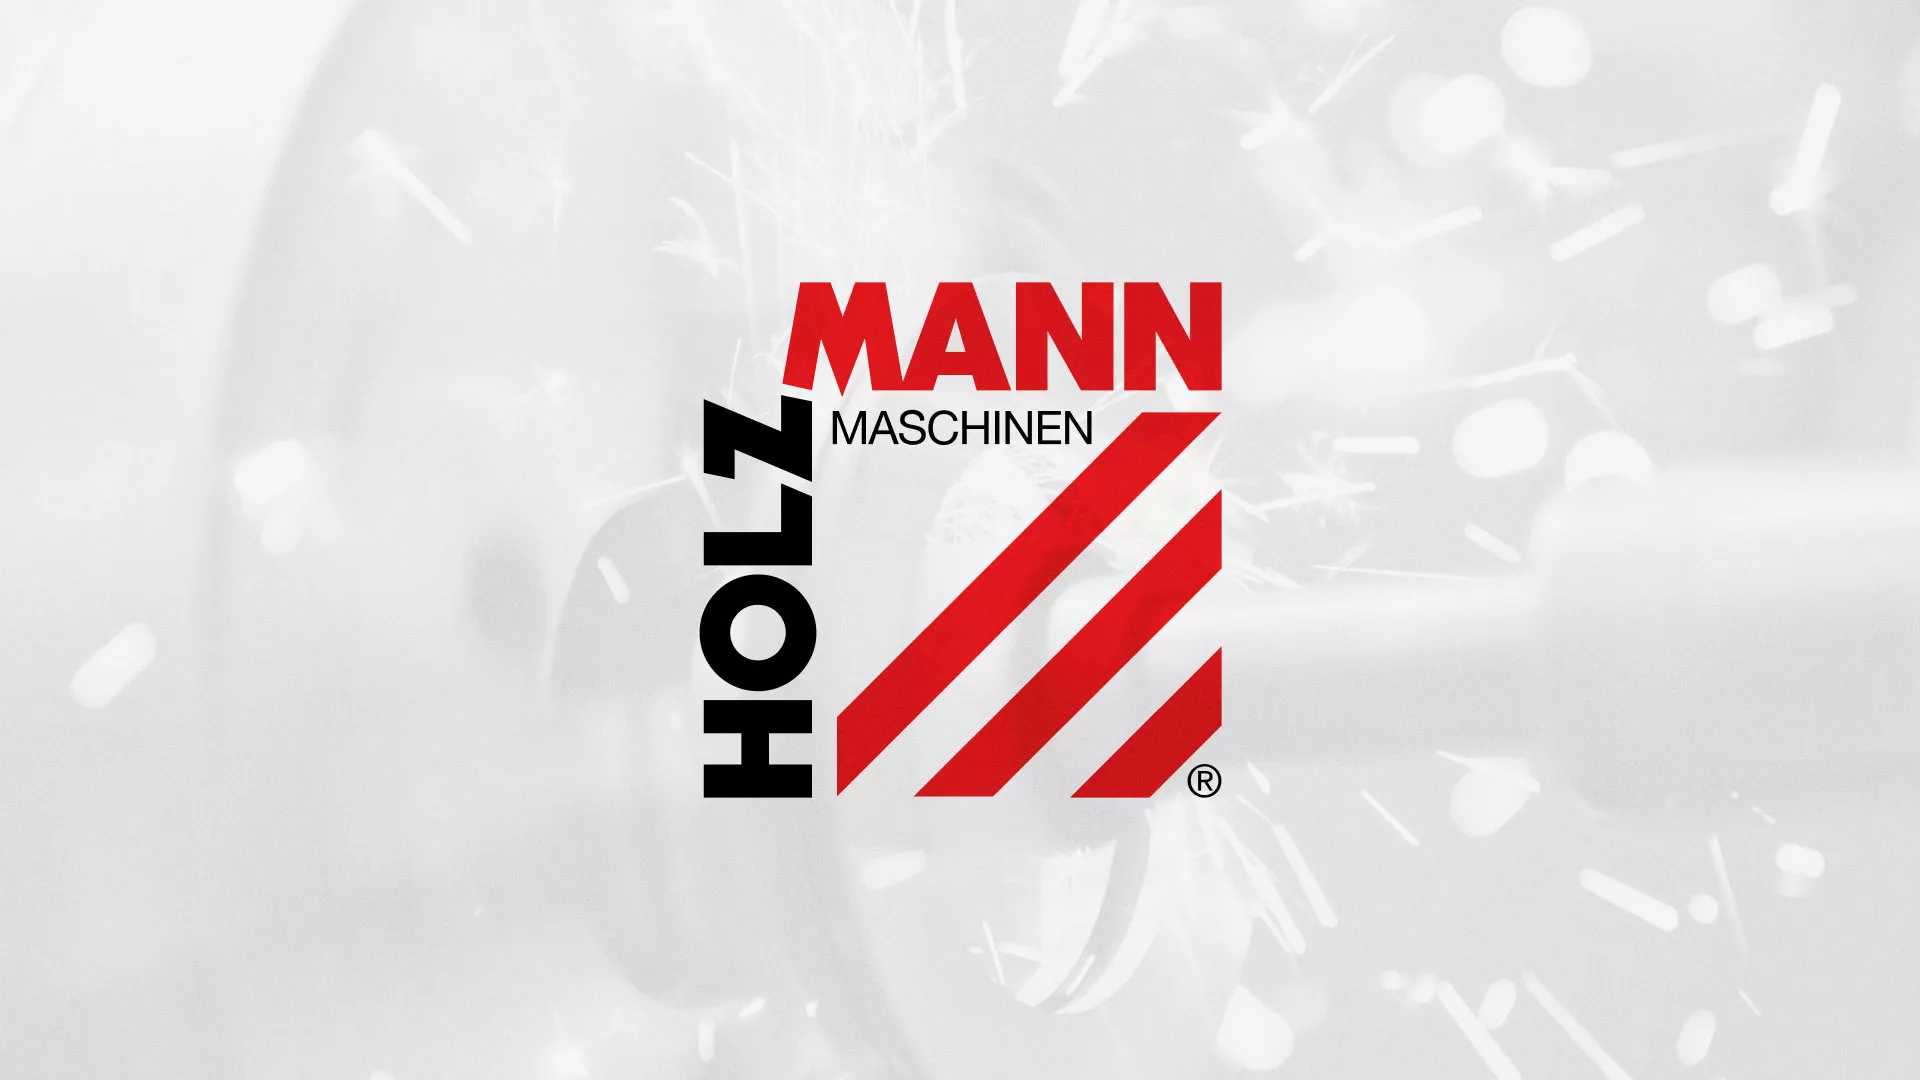 Создание сайта компании «HOLZMANN Maschinen GmbH» в Ликино-Дулево